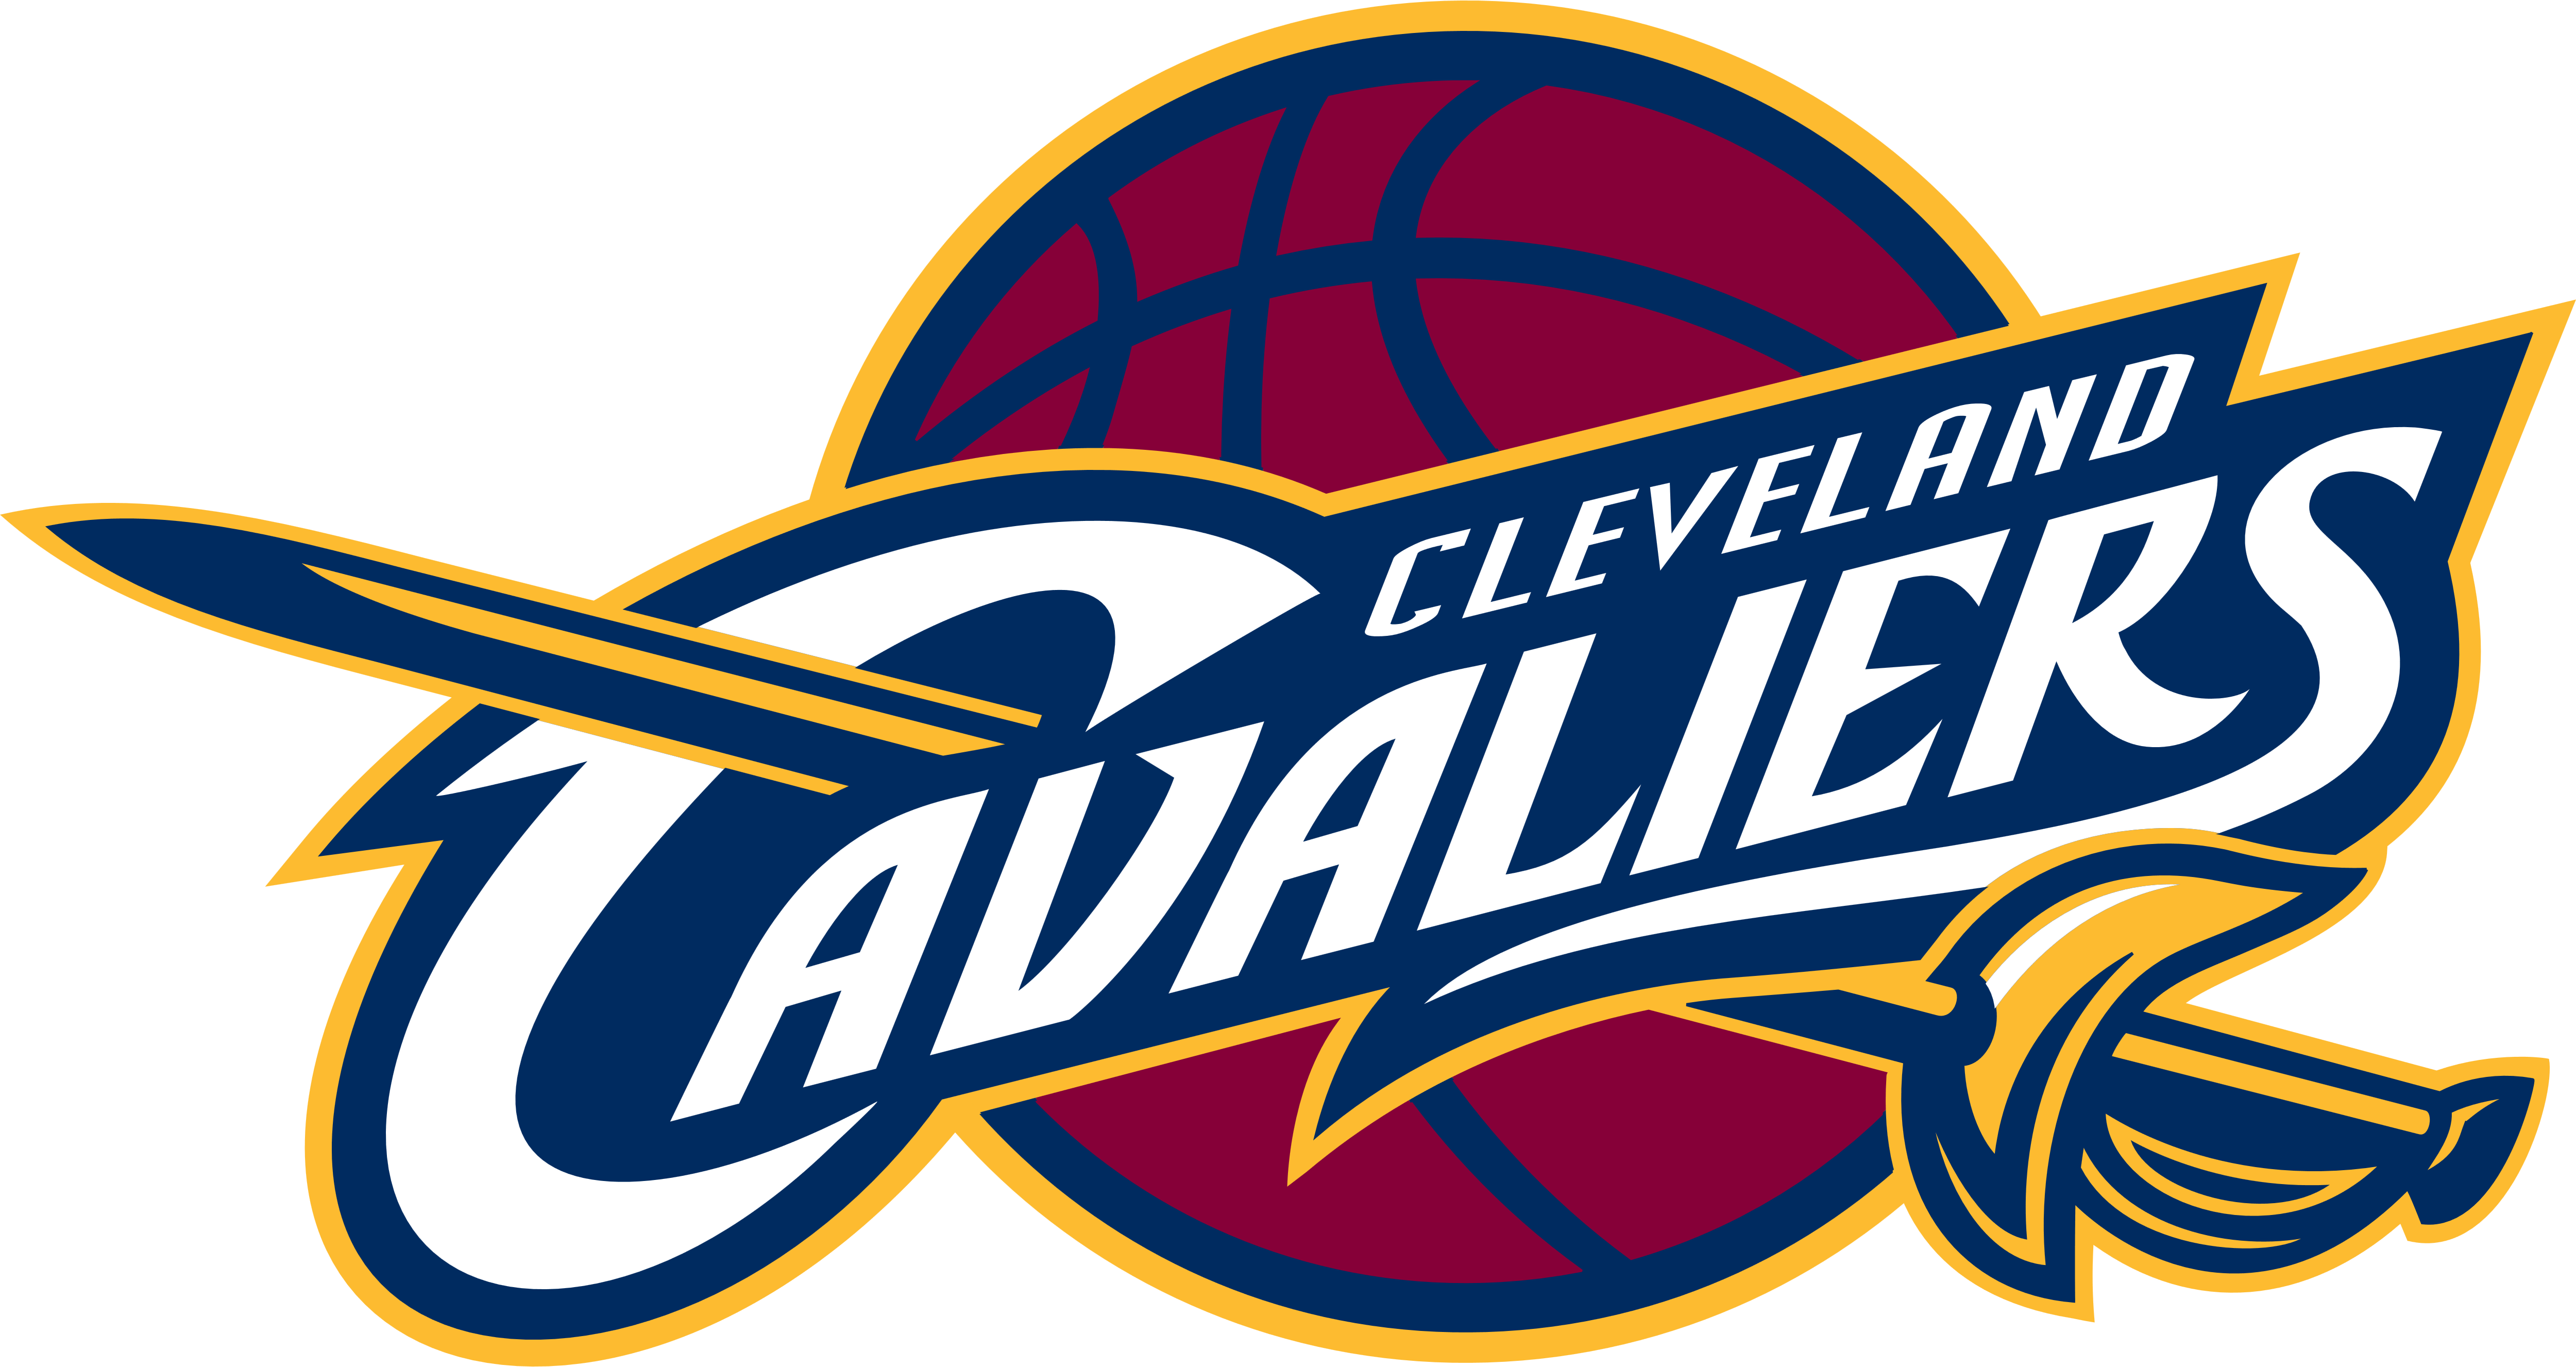 Cleveland Cavaliers Logo 2015 (5000x2653)